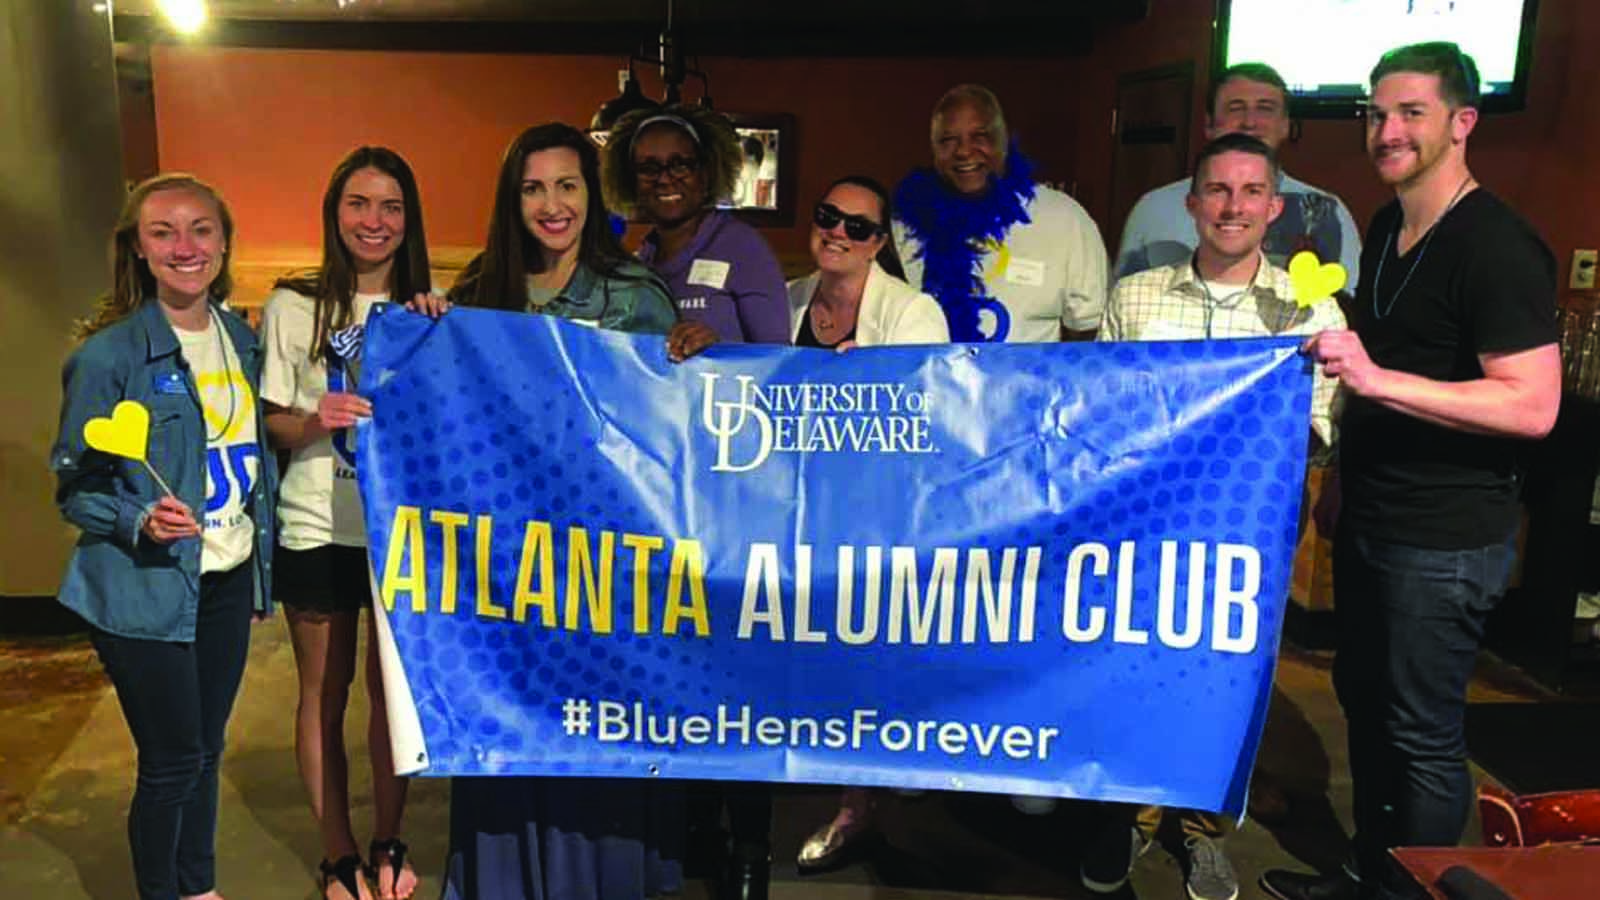 University of Delaware regional alumni events with the Atlanta Alumni Club